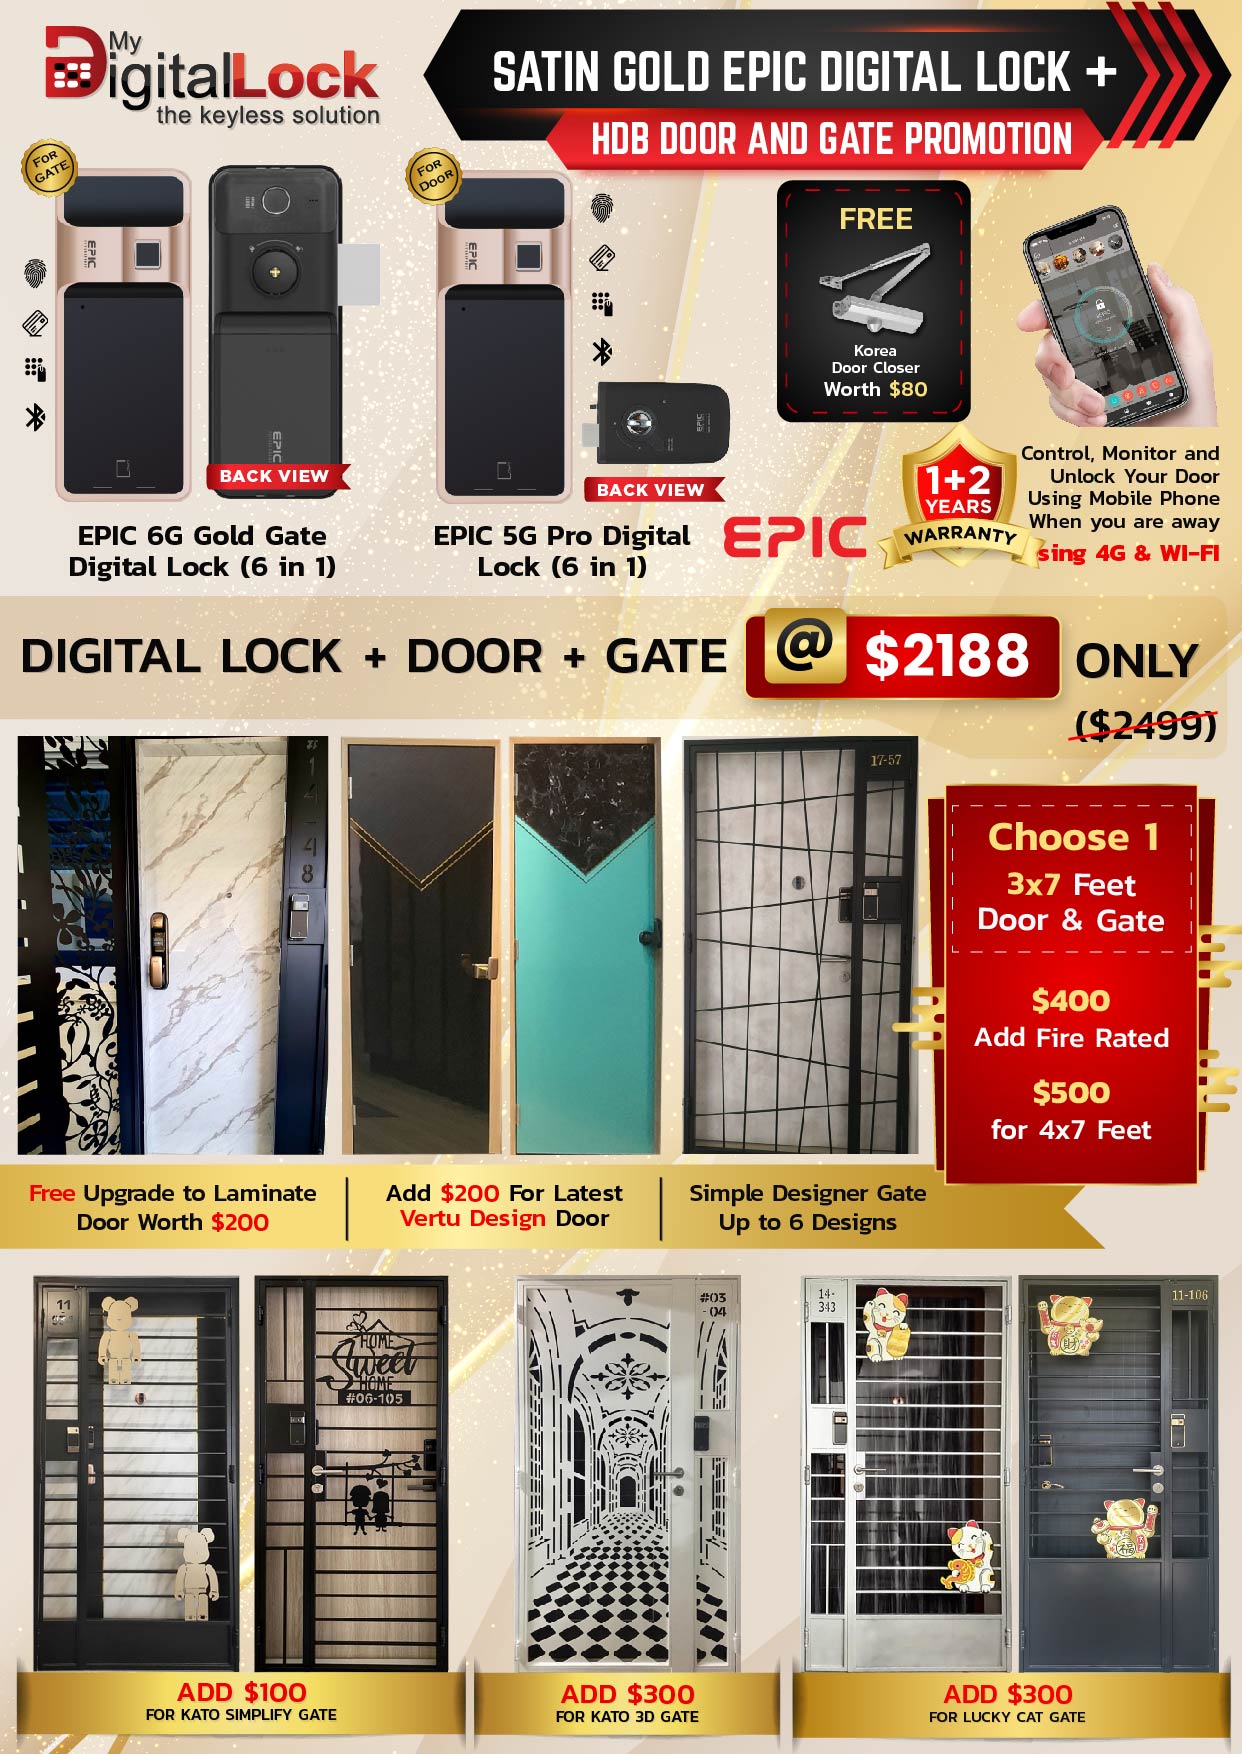 Satin Gold Epic Digital Lock + HDB Door And Gate Promotion 2022